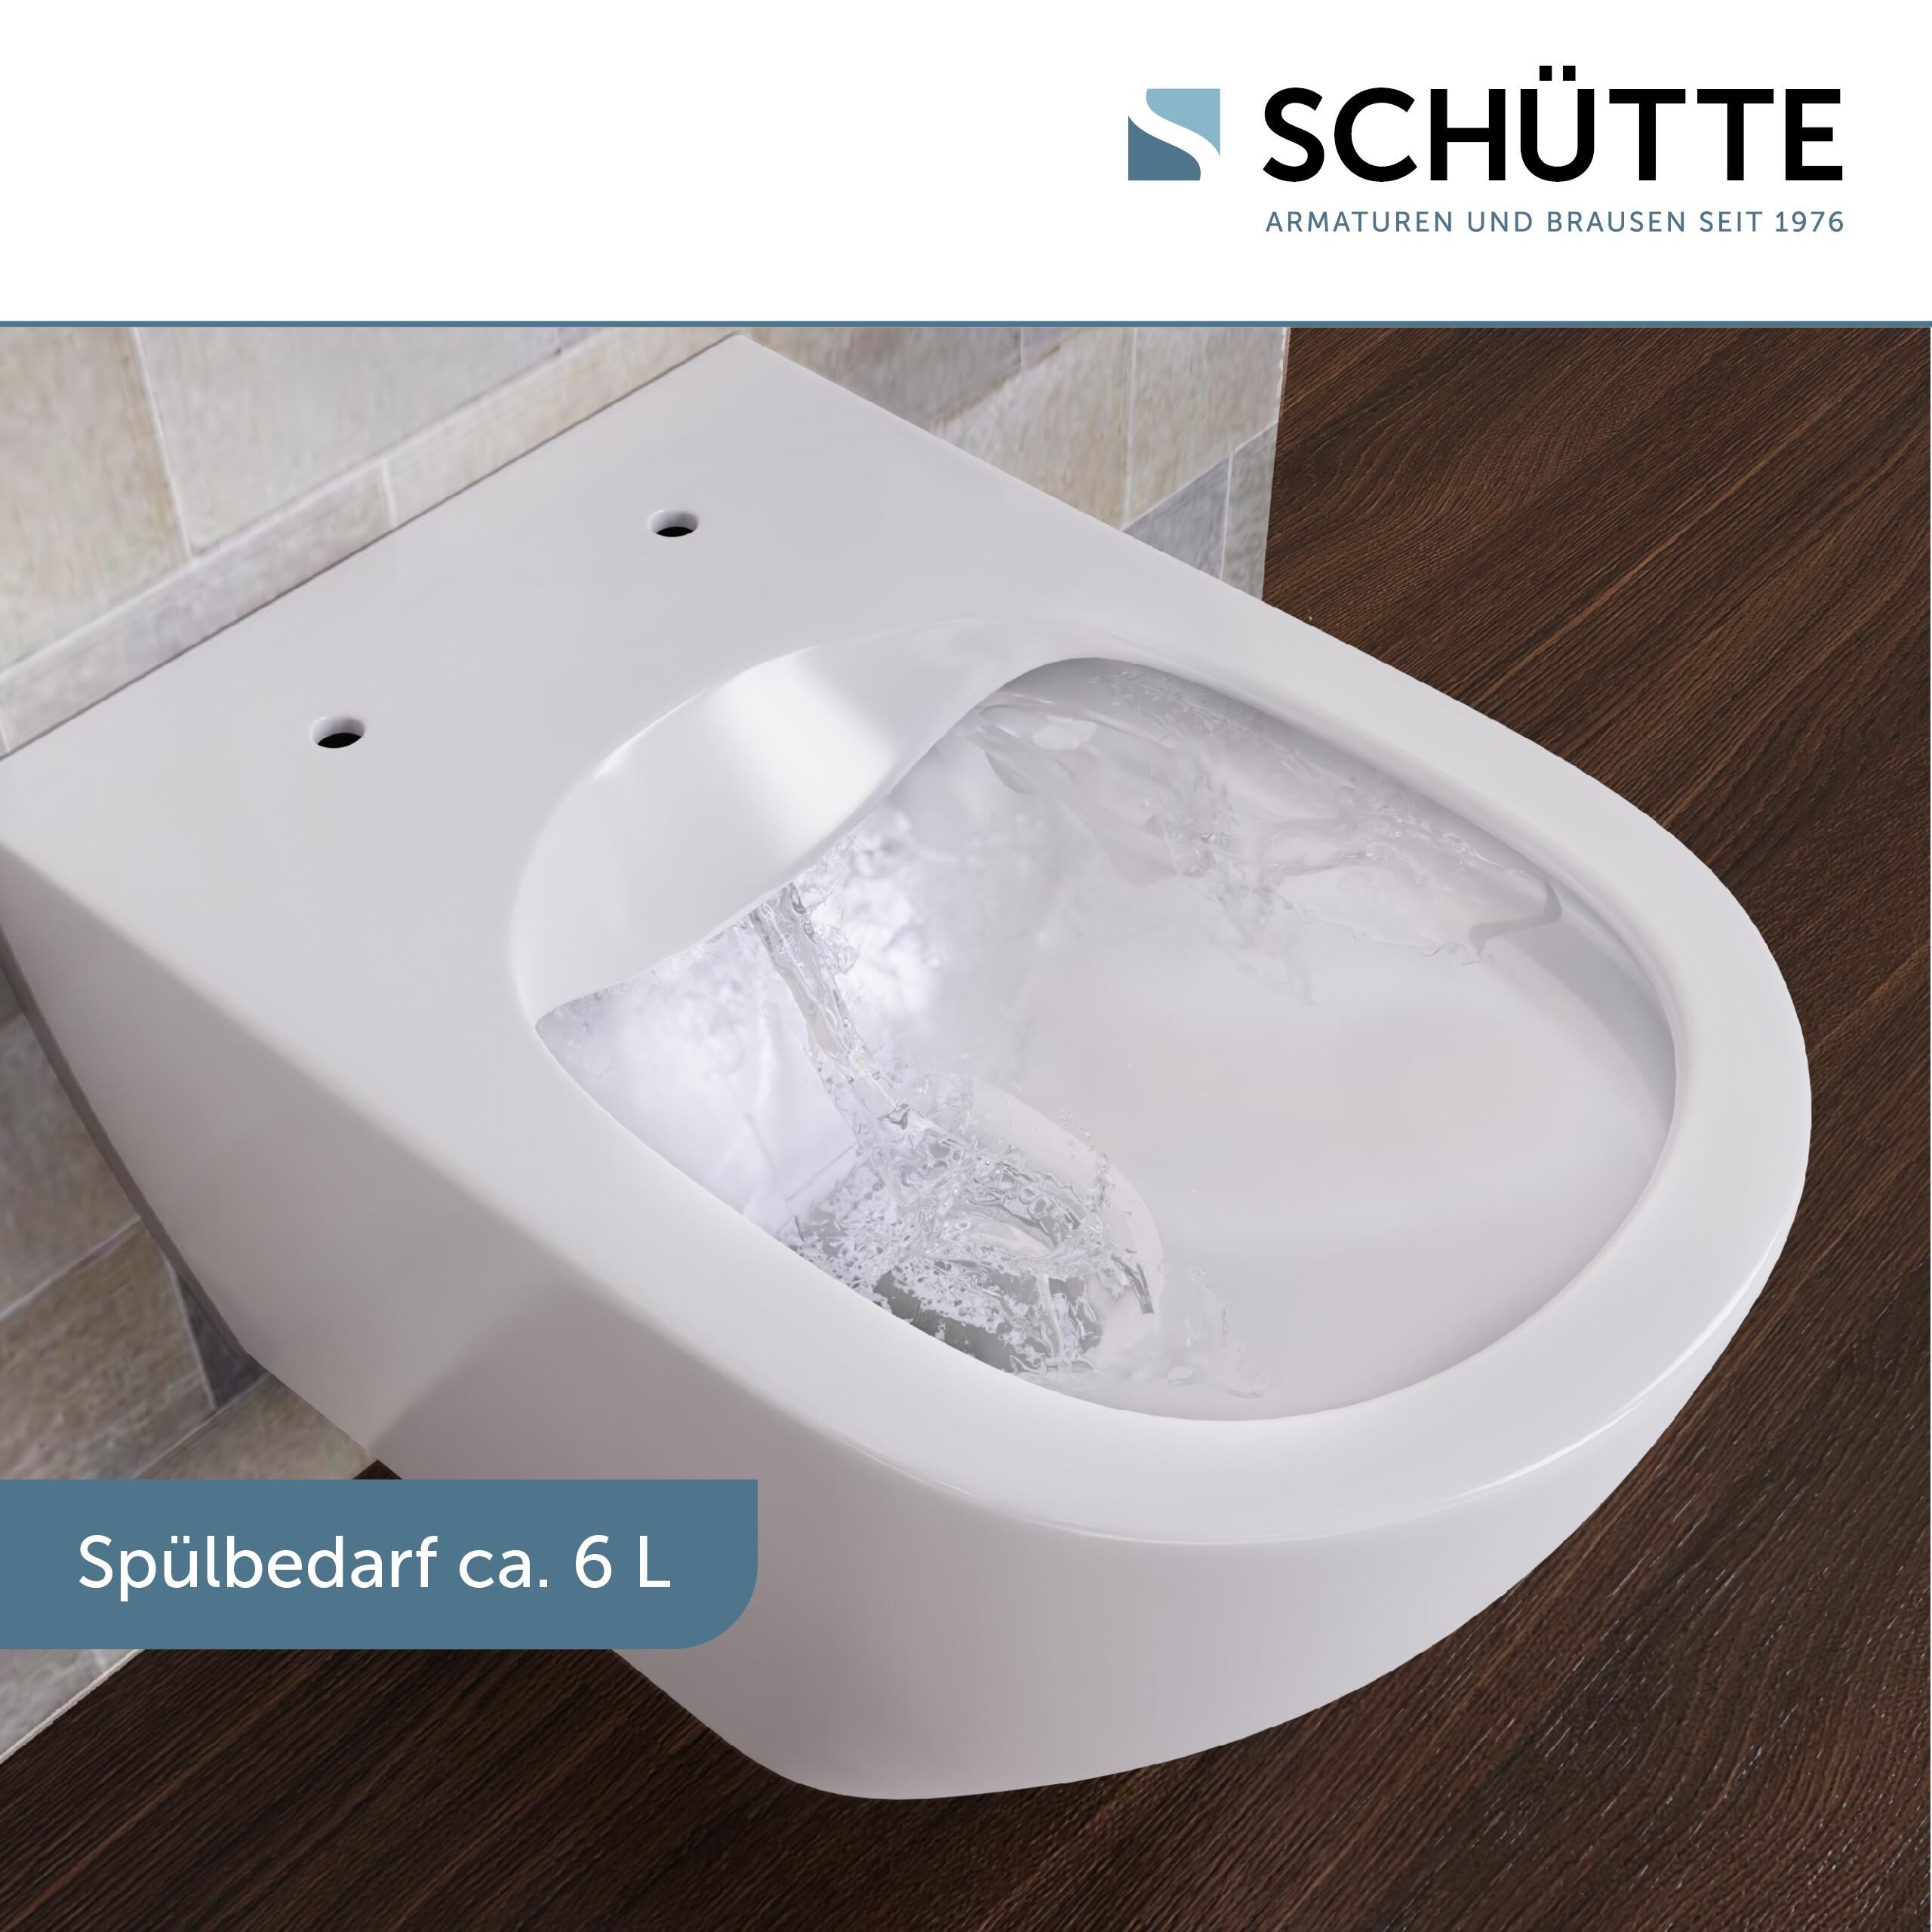 Schütte TASSONI BOWL Wand-WC, Weiß, spülrandlos | BadeDu | WCs & Toiletten